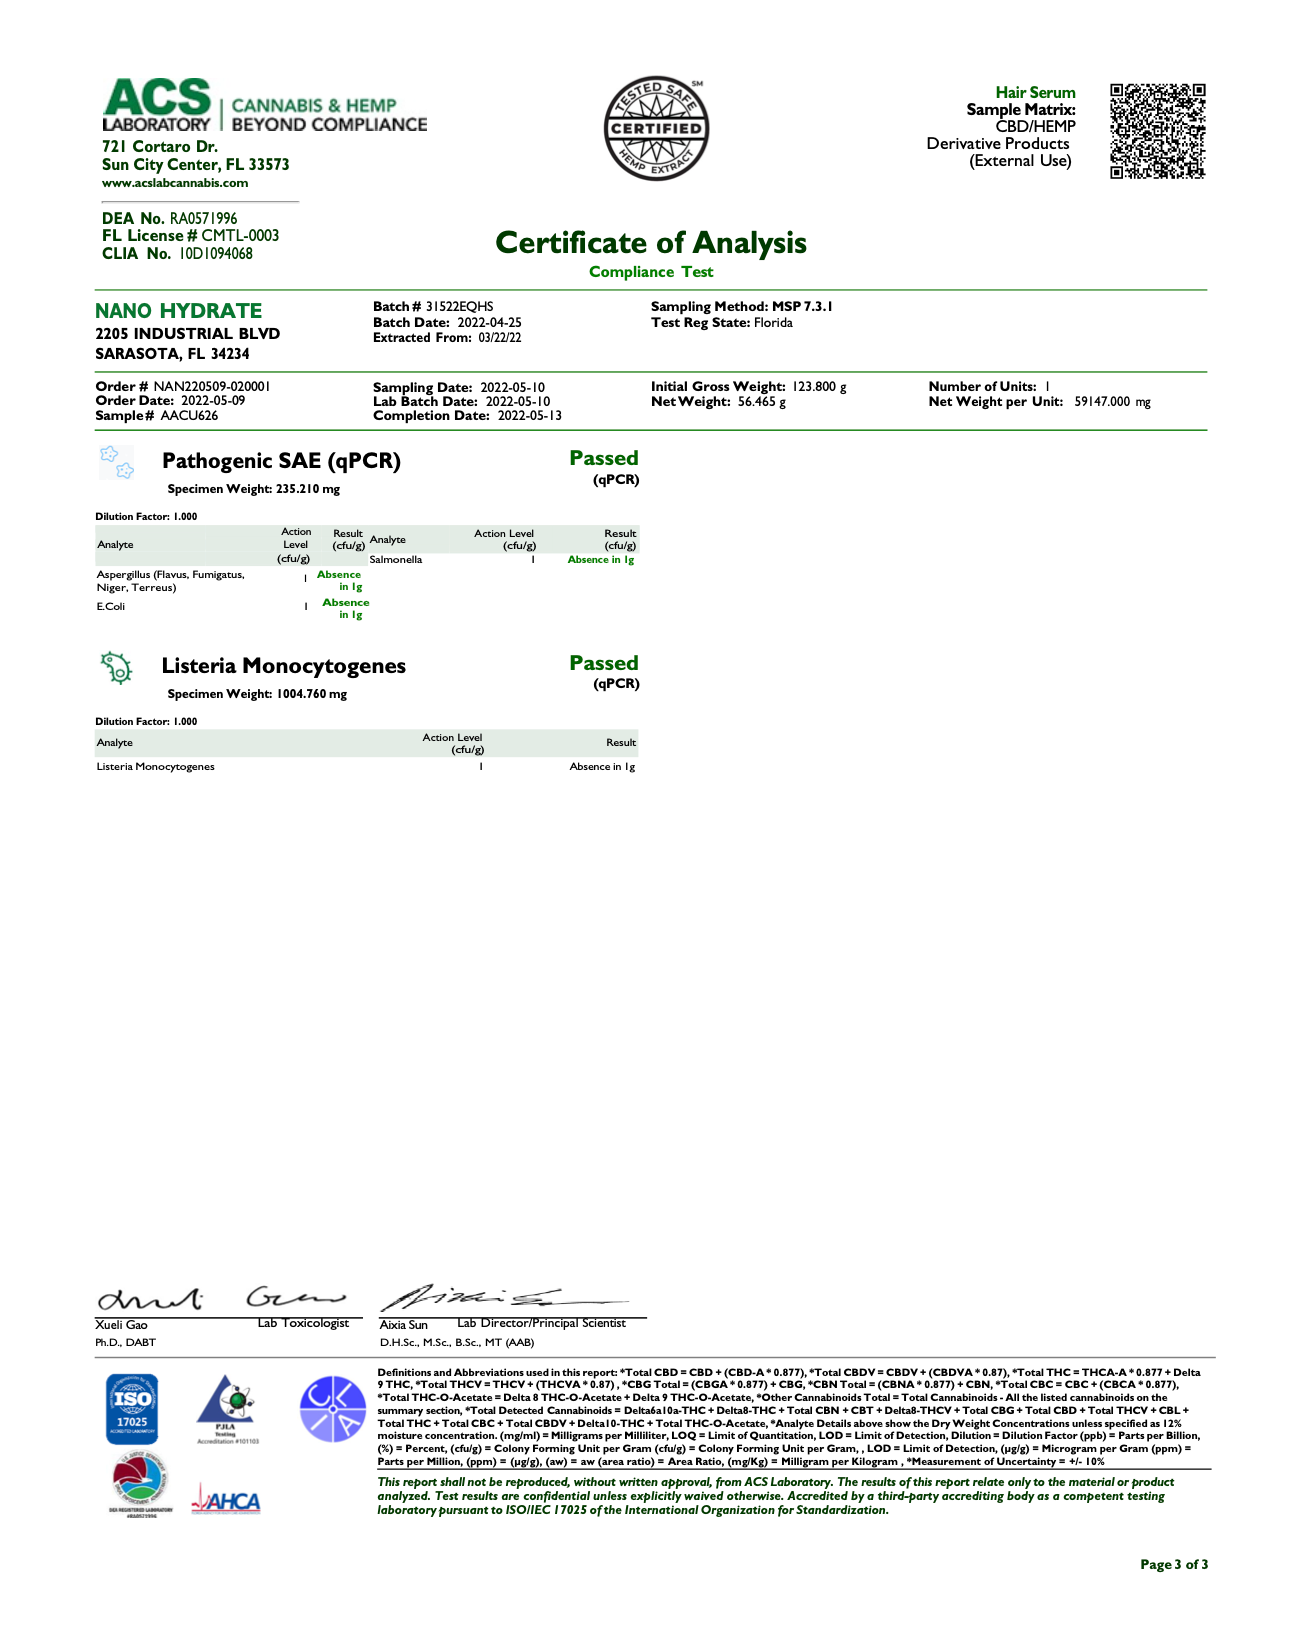 Certificate of Analysis for MRNG LLC Hair and Scalp Serum THC free Hemp CBD Cosmetic Wellness Product